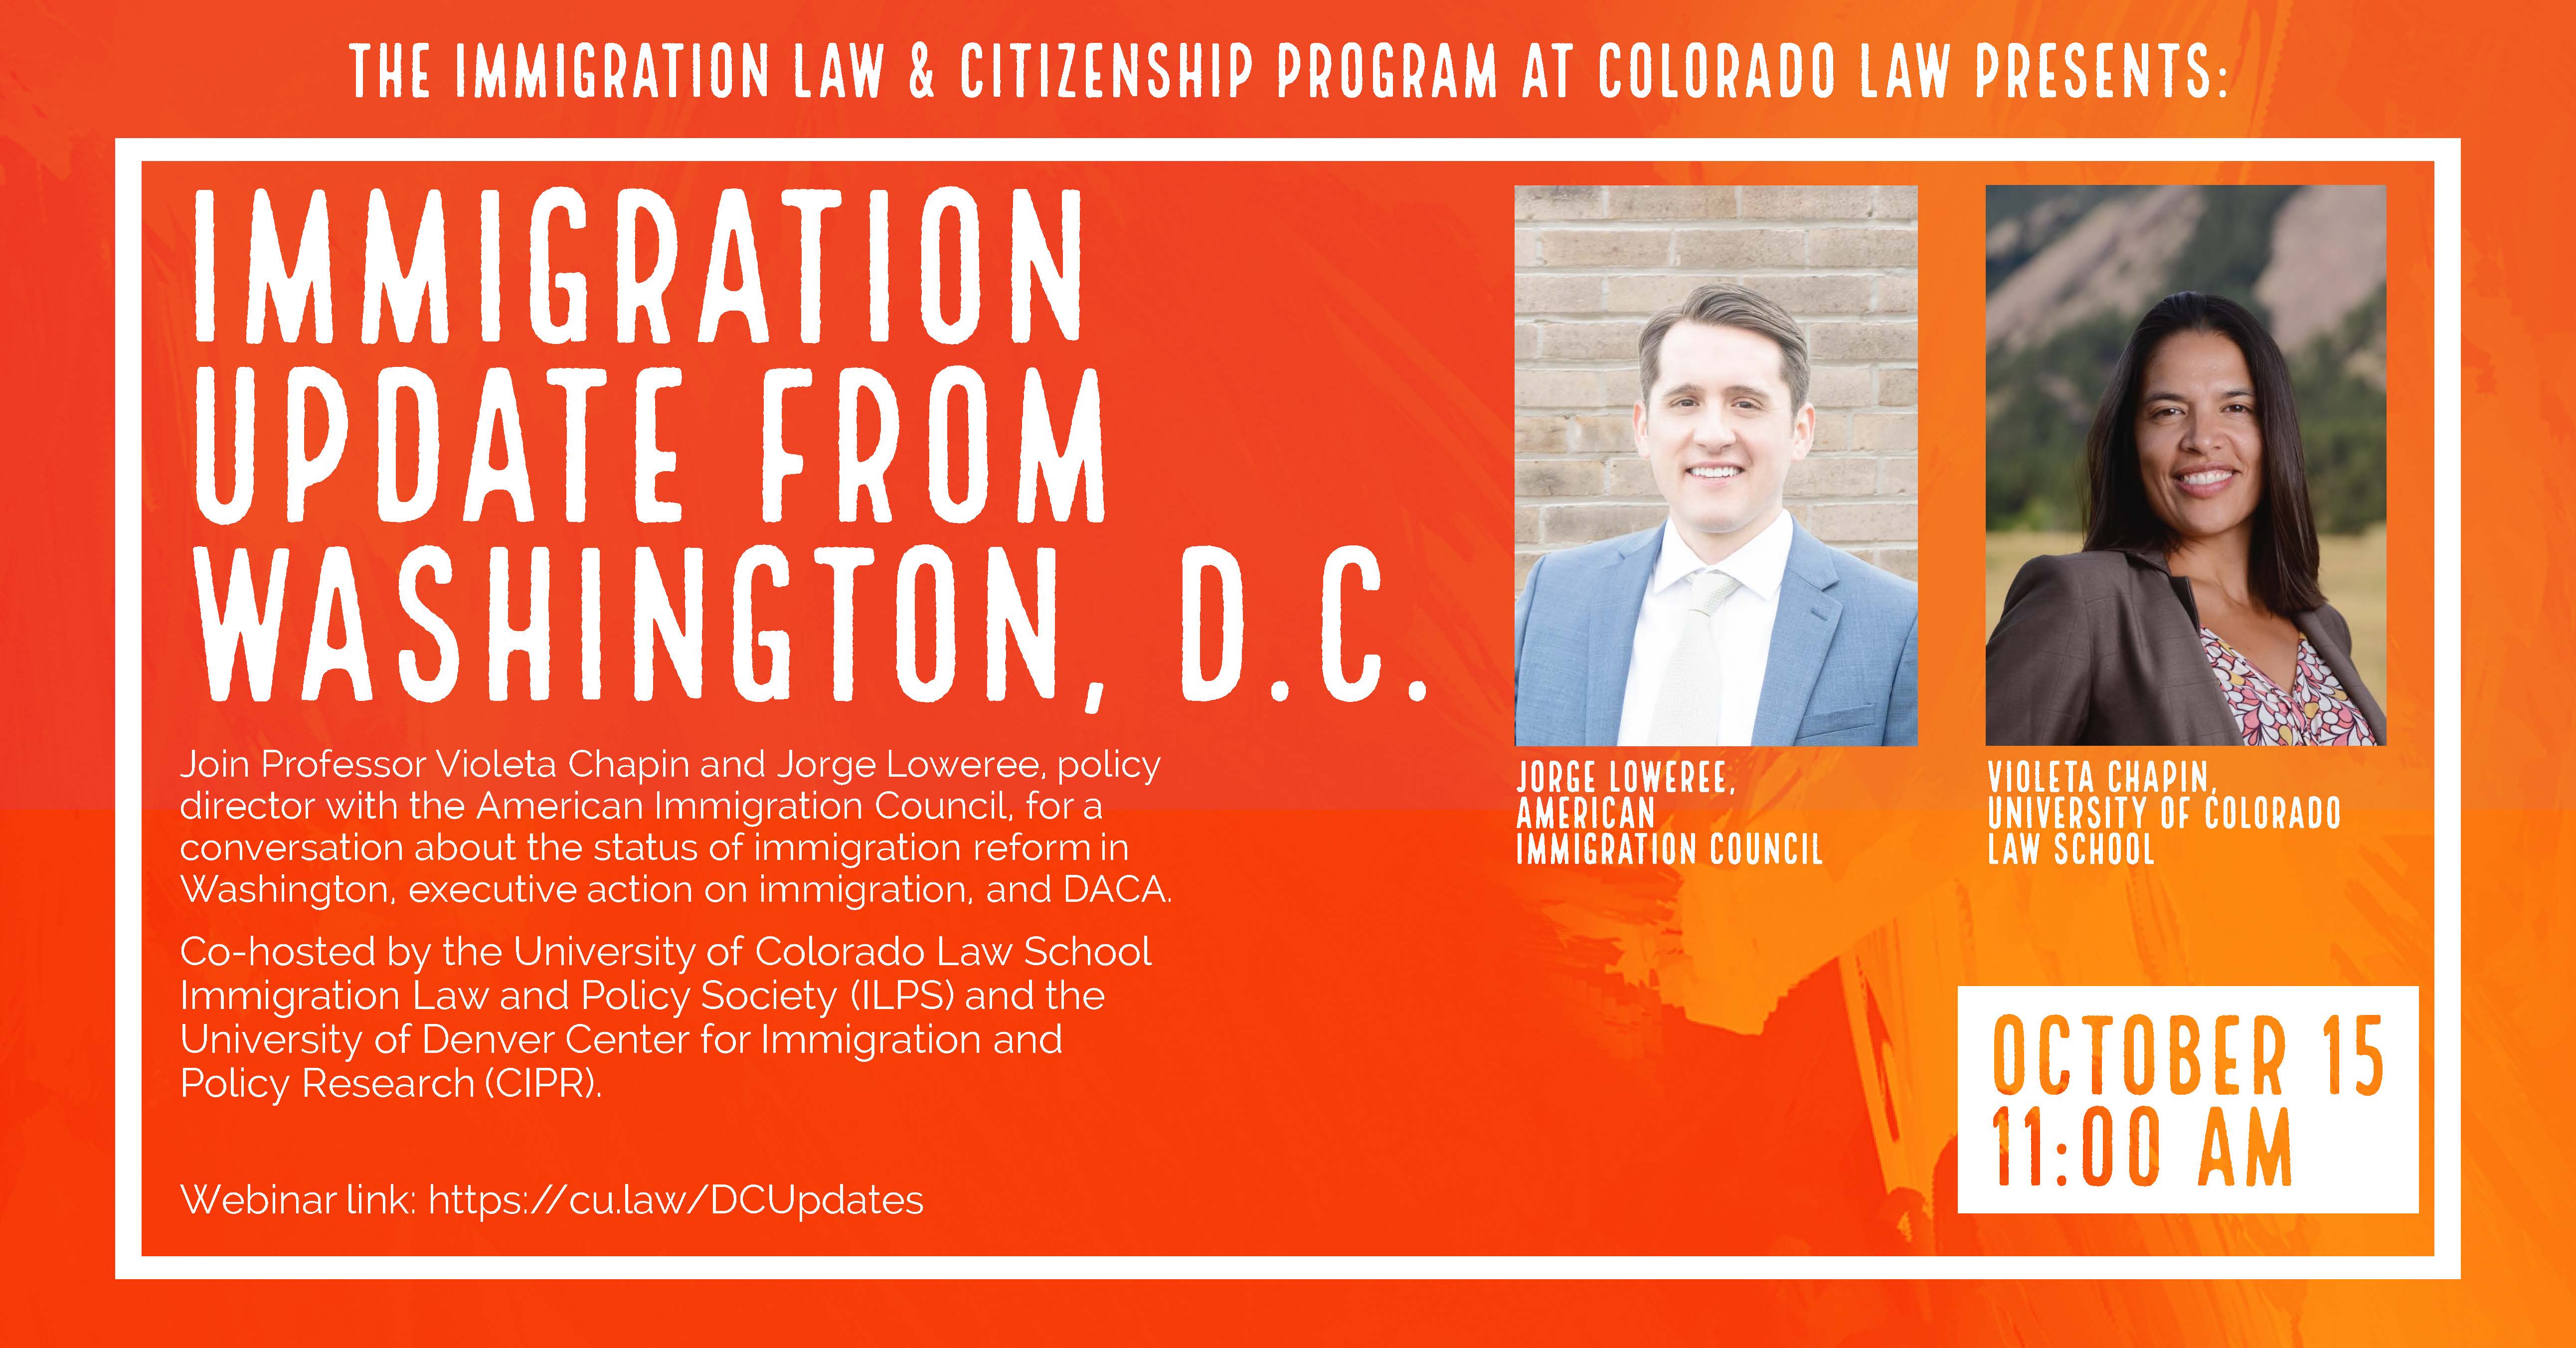 https://www.colorado.edu/law/immigration-1015-event-lawyers